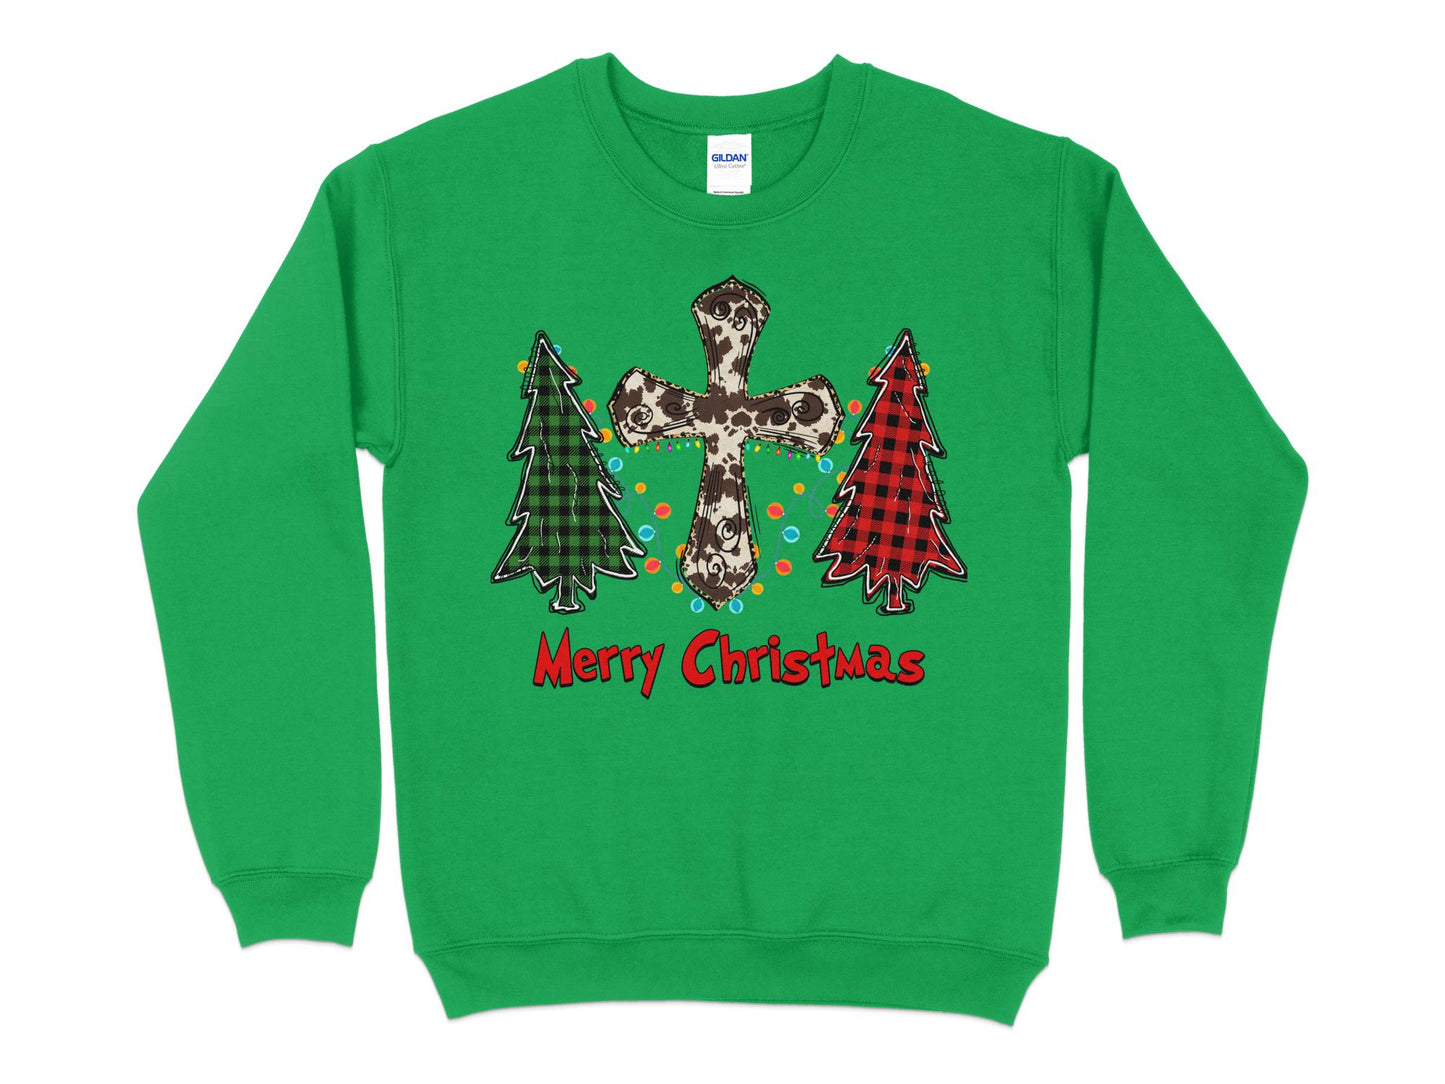 Merry Christmas Cow Print Cross Buffalo Plaid Tree Sweatshirt, Christmas Sweater, Cute Christmas Shirt, Holiday Shirt, Xmas Gifts - Mardonyx Sweatshirt S / Irish Green